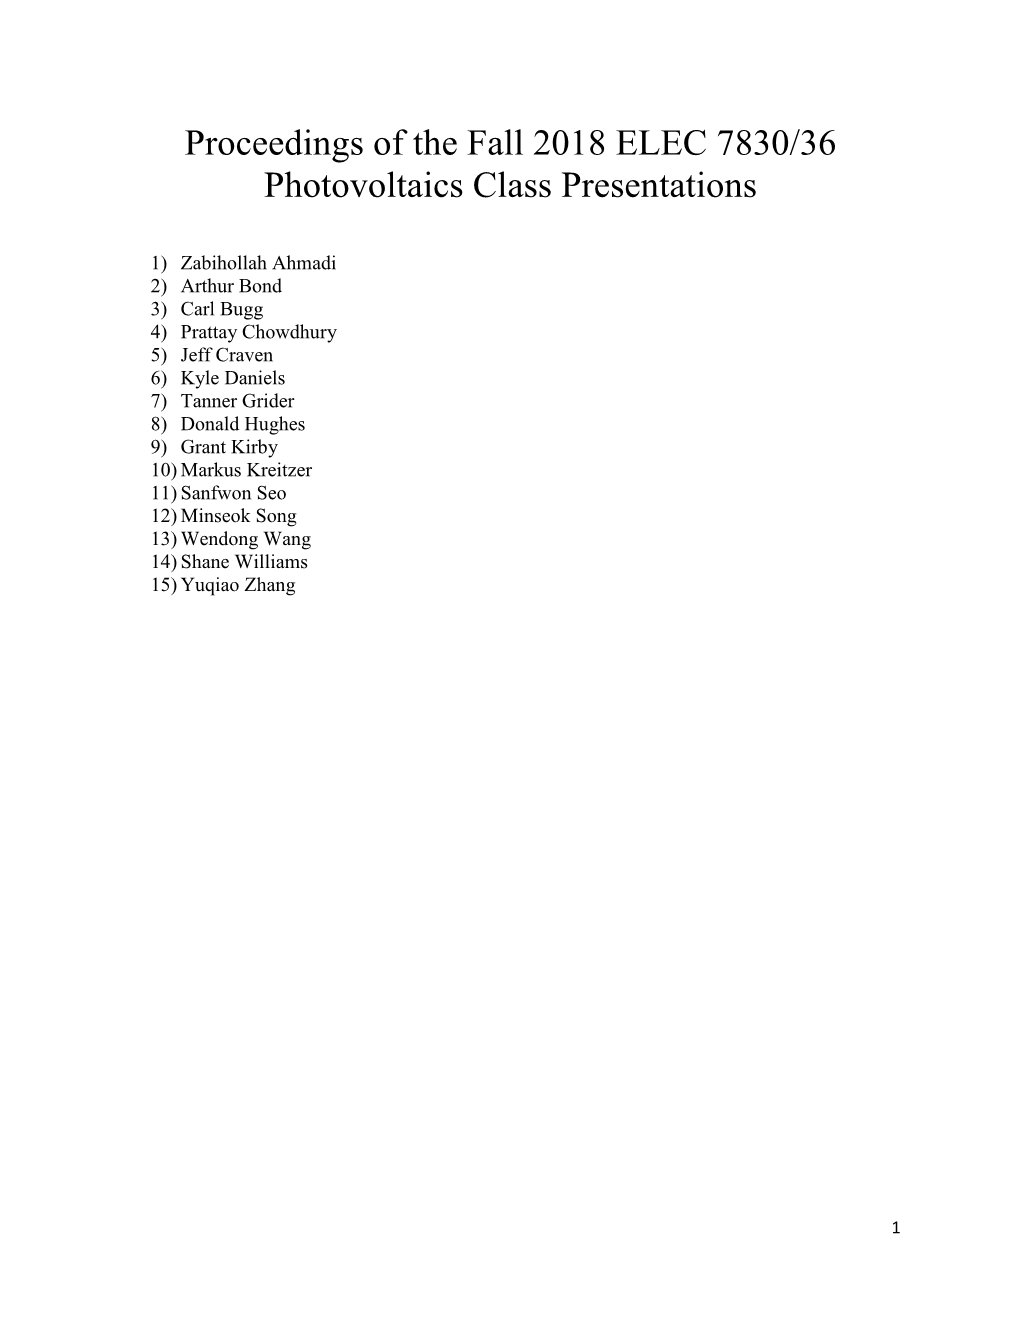 Proceedings of the Fall 2018 ELEC 7830/36 Photovoltaics Class Presentations